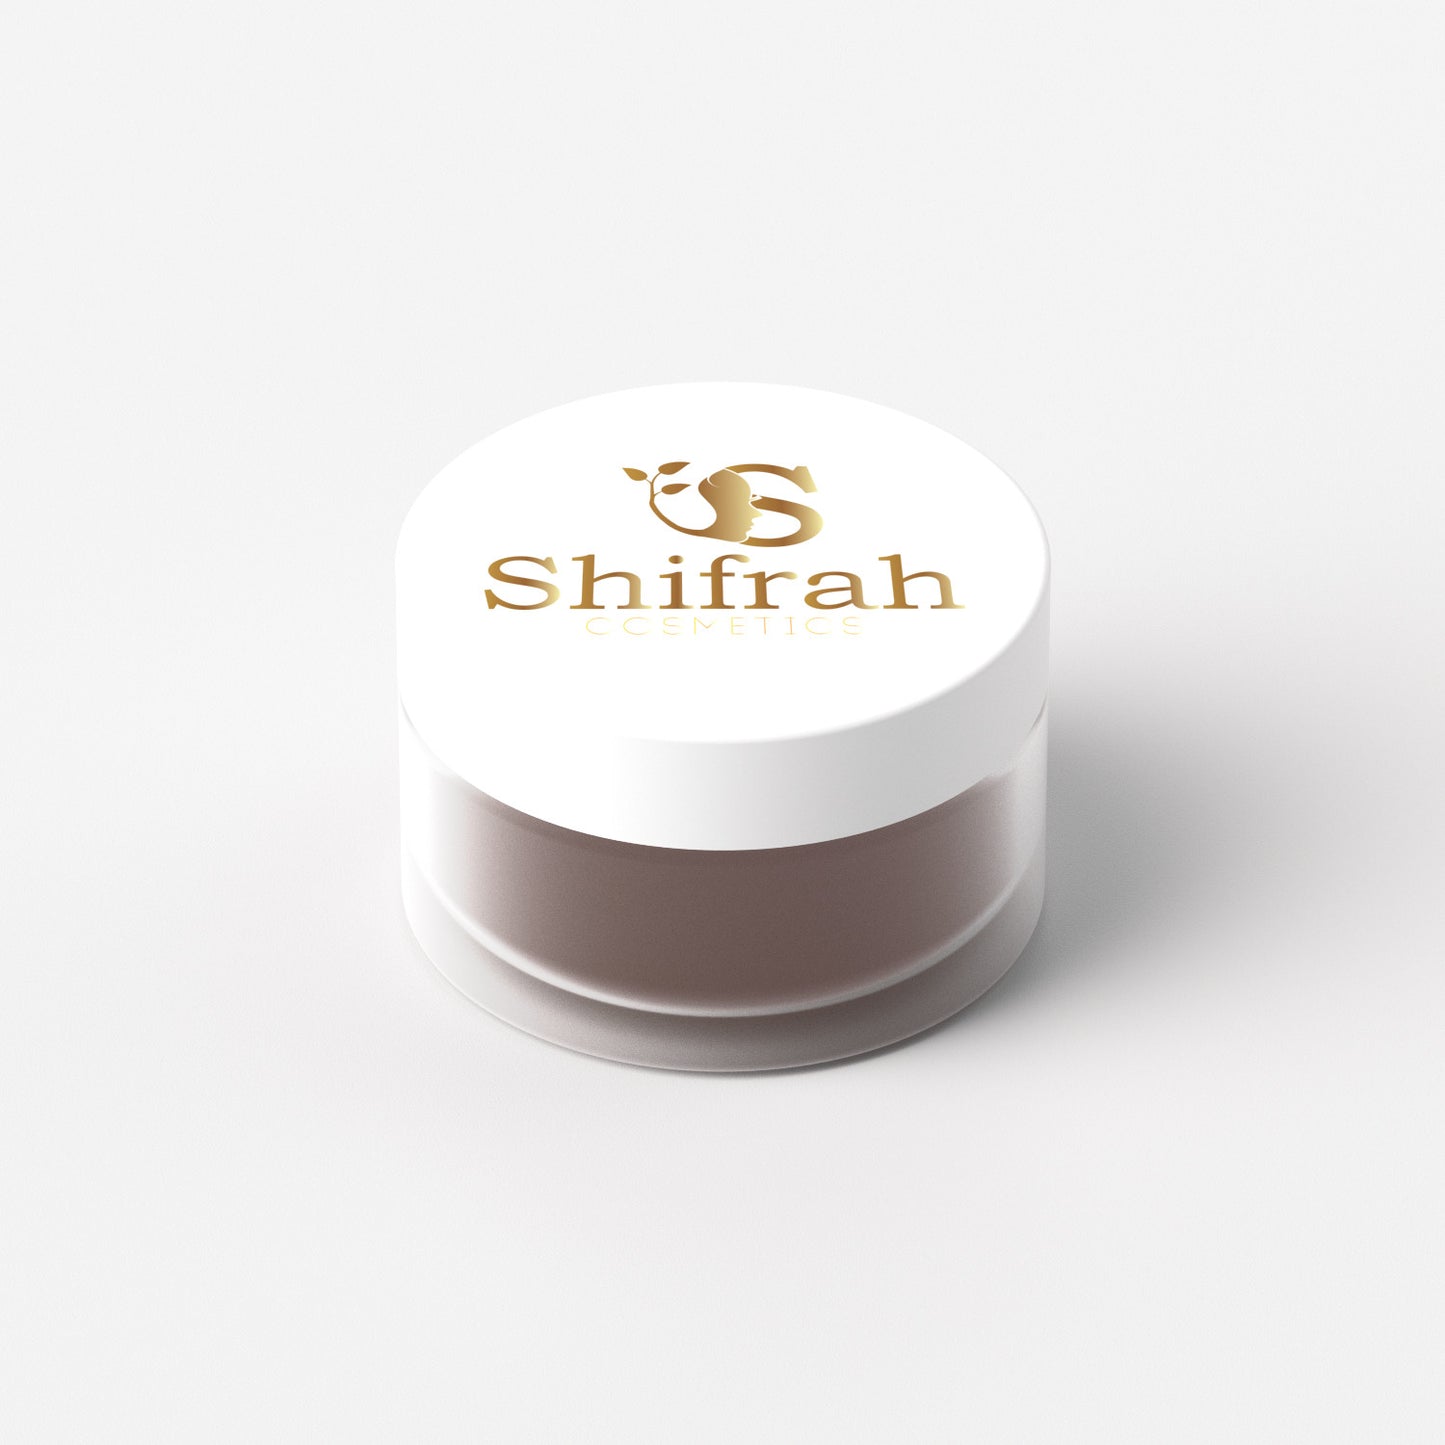 shifrah-cosmetics beauty product